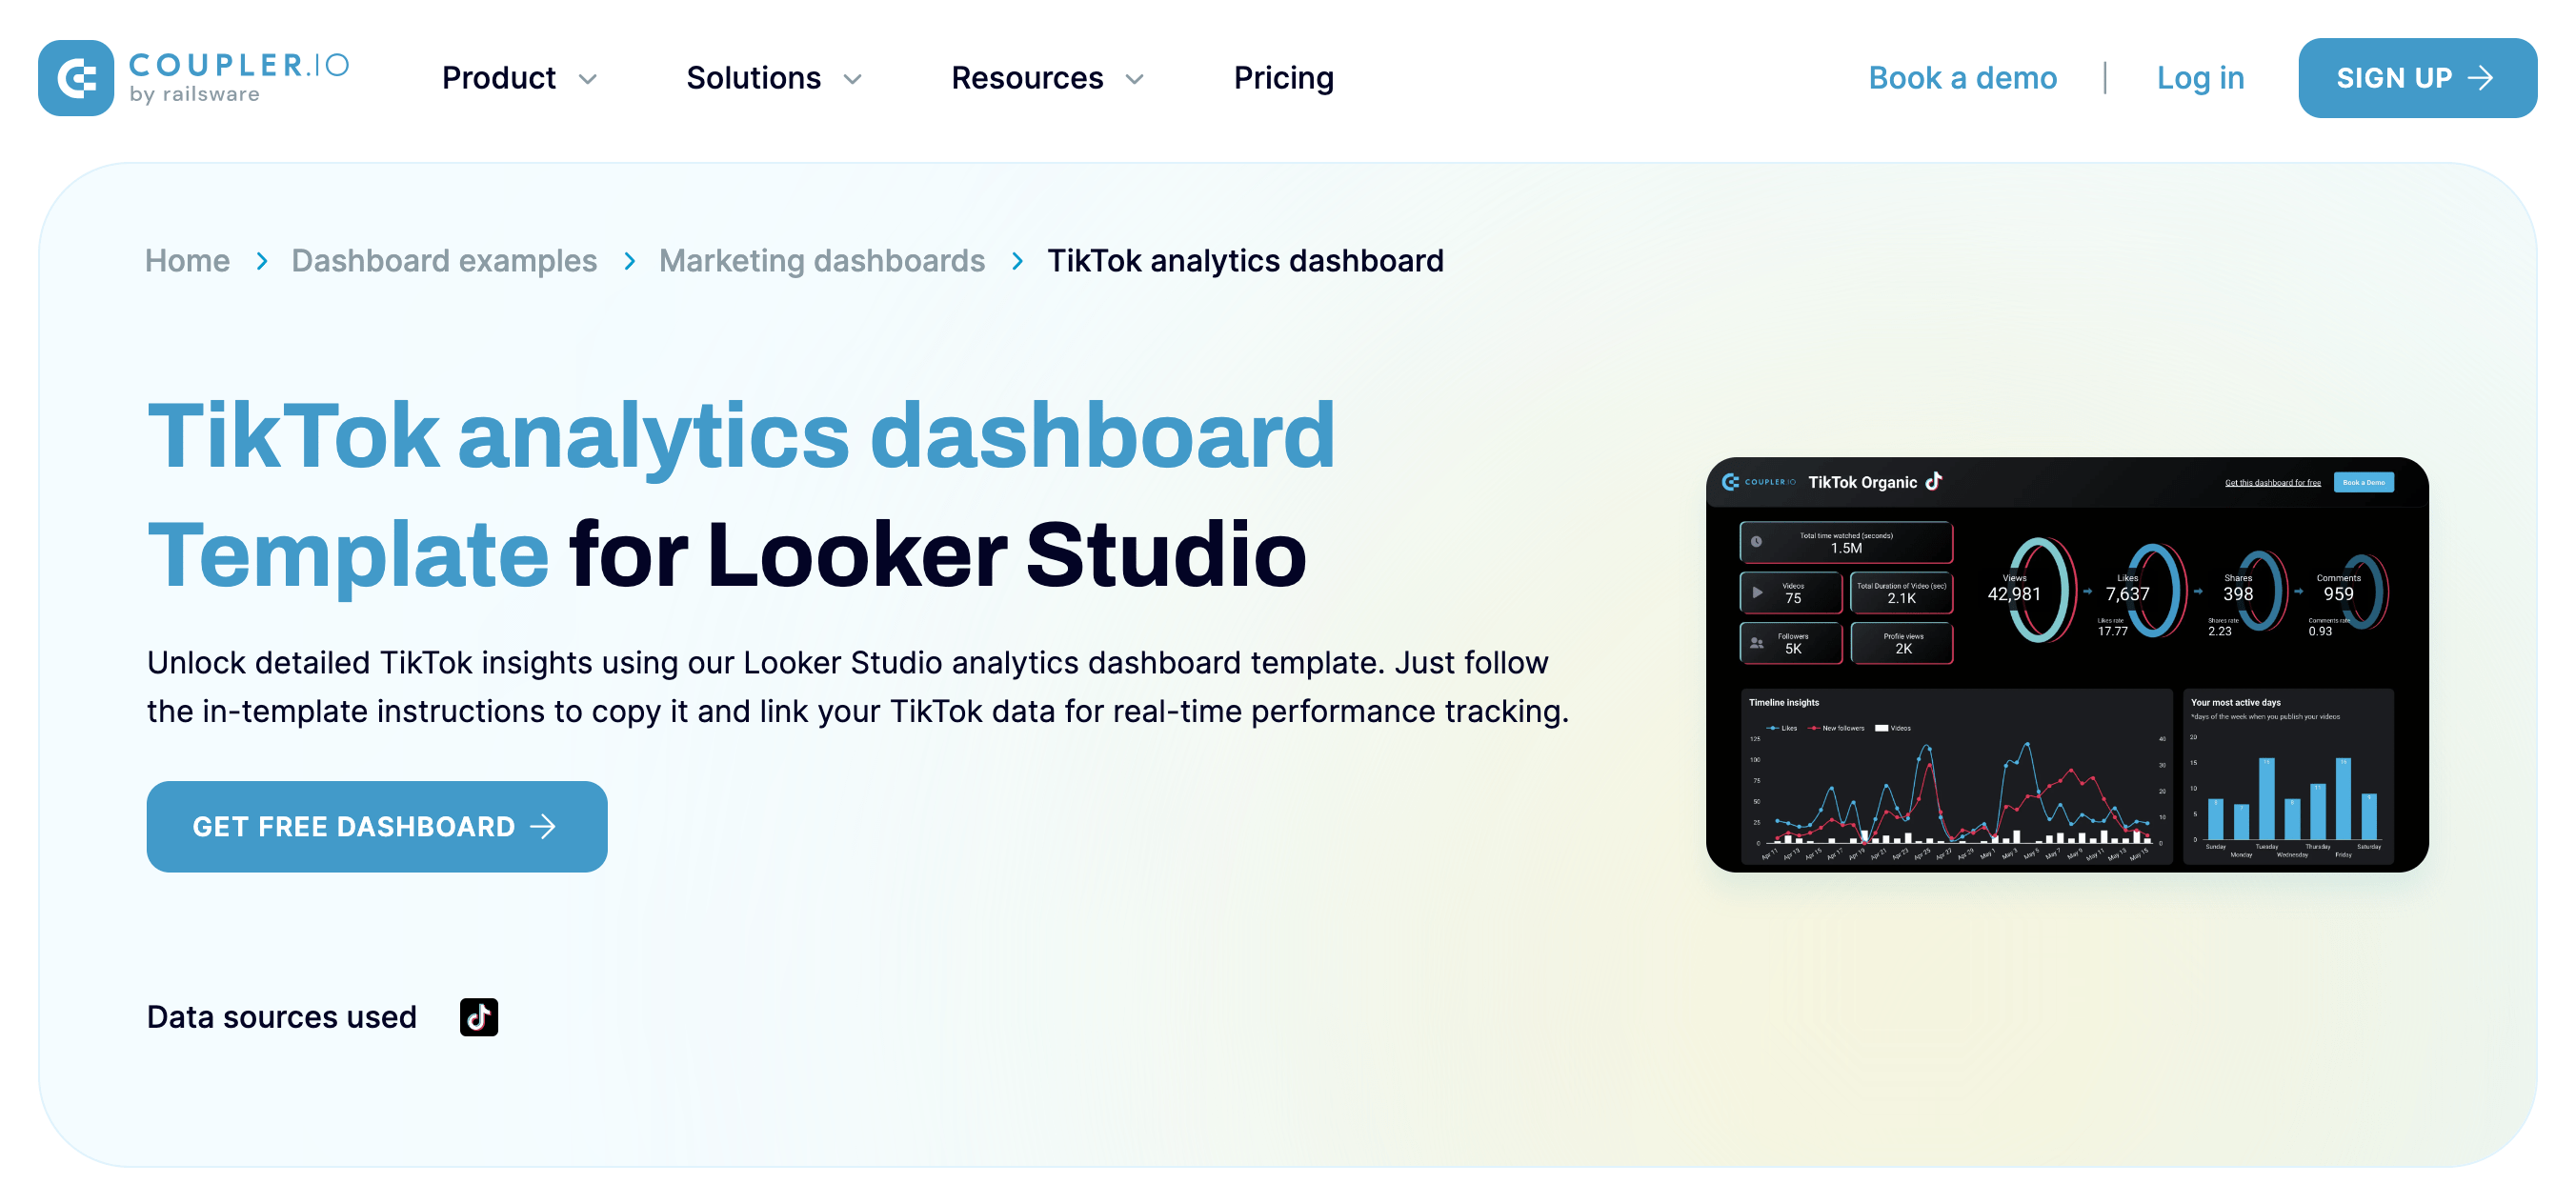 Coupler.io TikTok analytics dashboard